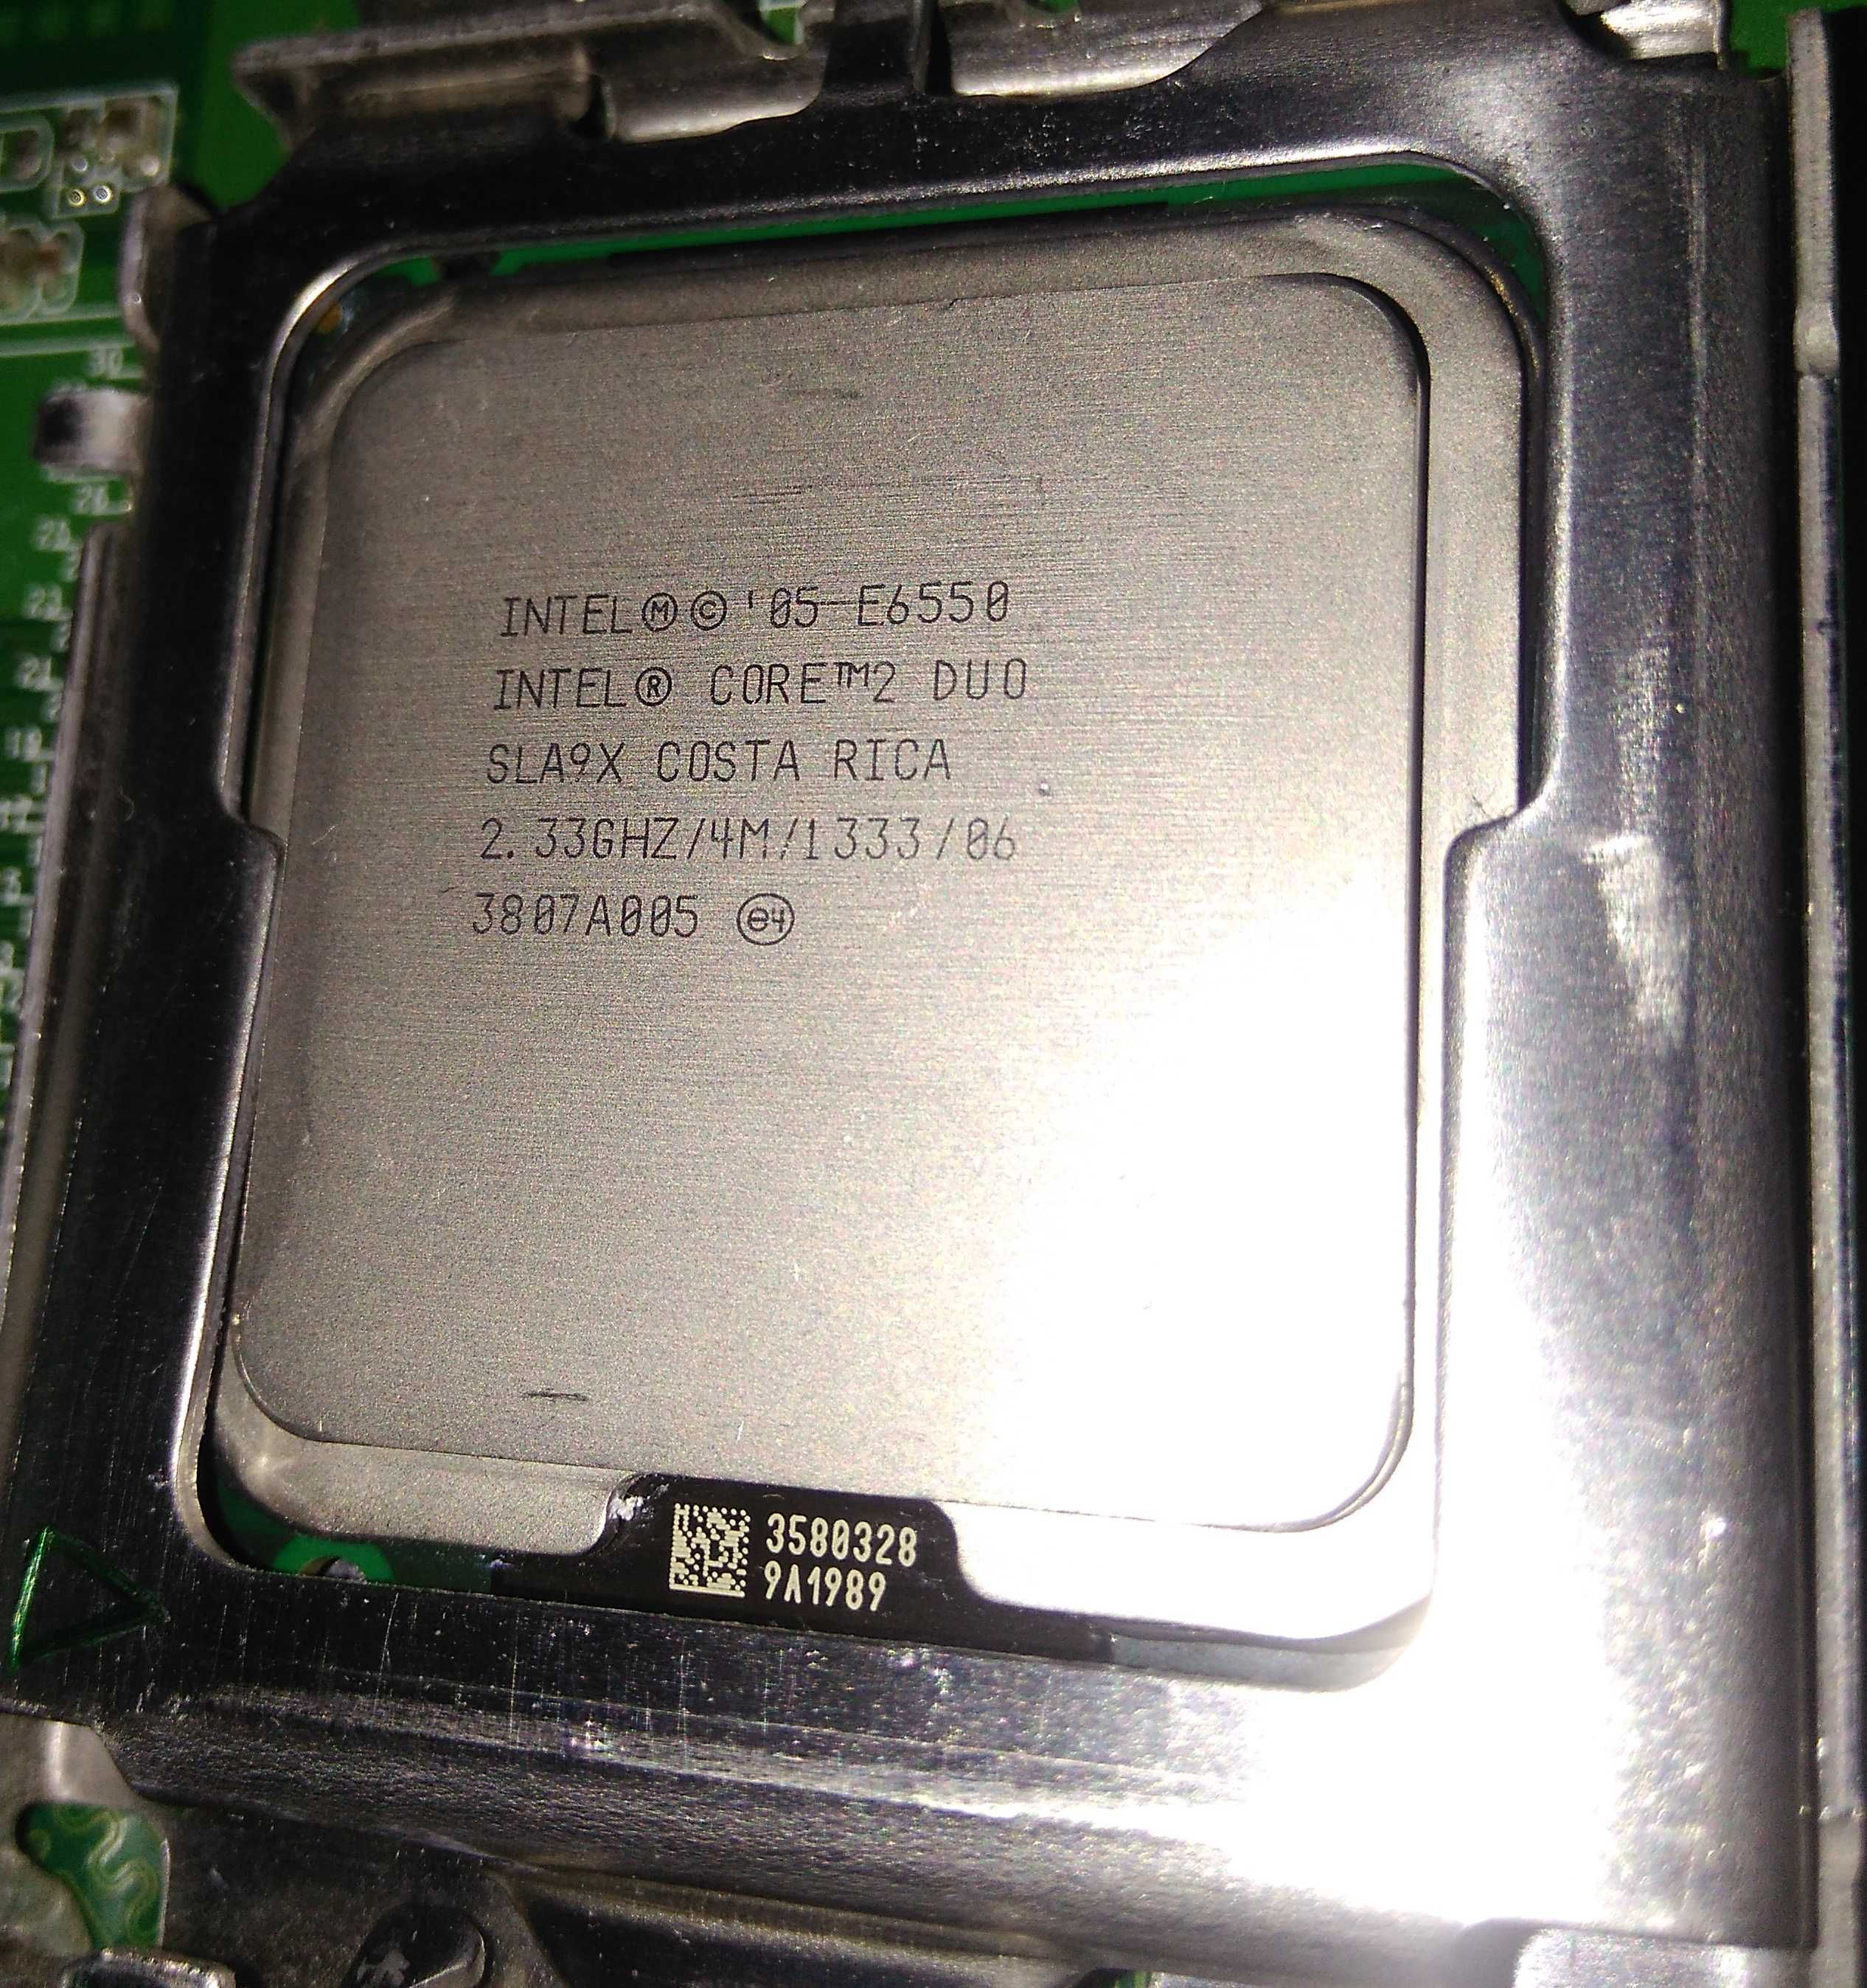 Kitt placa baza Intel DG41RQ + procesor E6550 + 2GB RAM + cooler